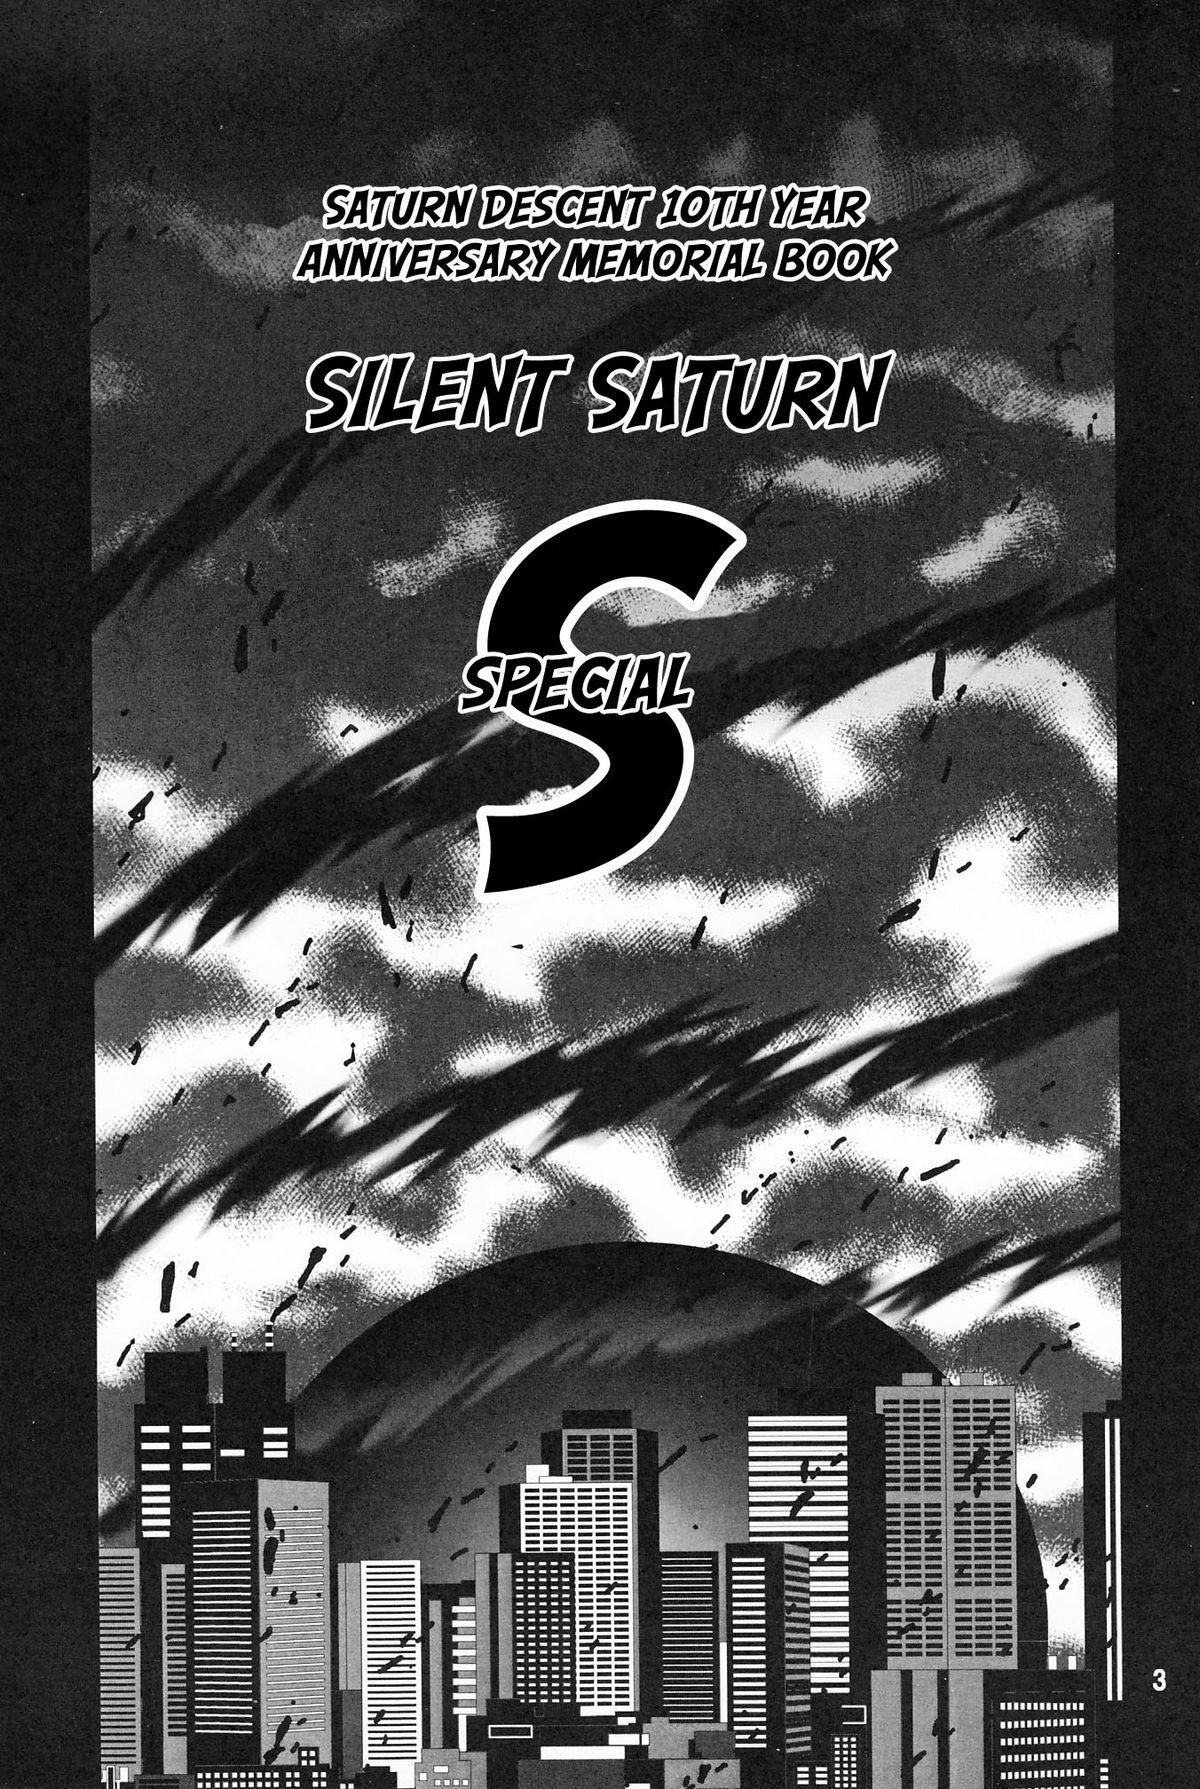 [Thirty Saver Street 2D Shooting (Maki Hideto, Sawara Kazumitsu)] Silent Saturn S Special - Satān kōrin 10-shūnen kinen hon | Saturn Descent 10th Year Anniversary Memorial Book (Bishoujo Senshi Sailor Moon) [English] 1